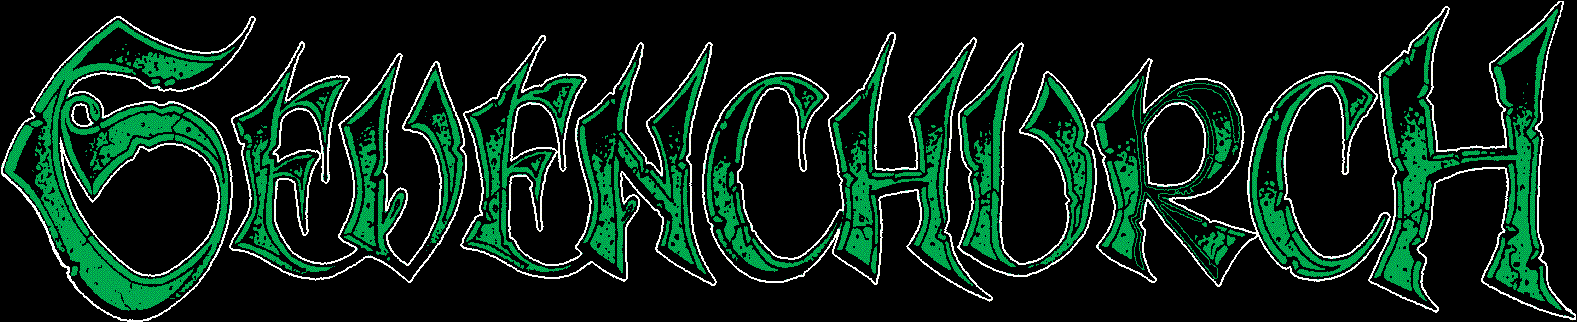 Sevenchurch Logo 2